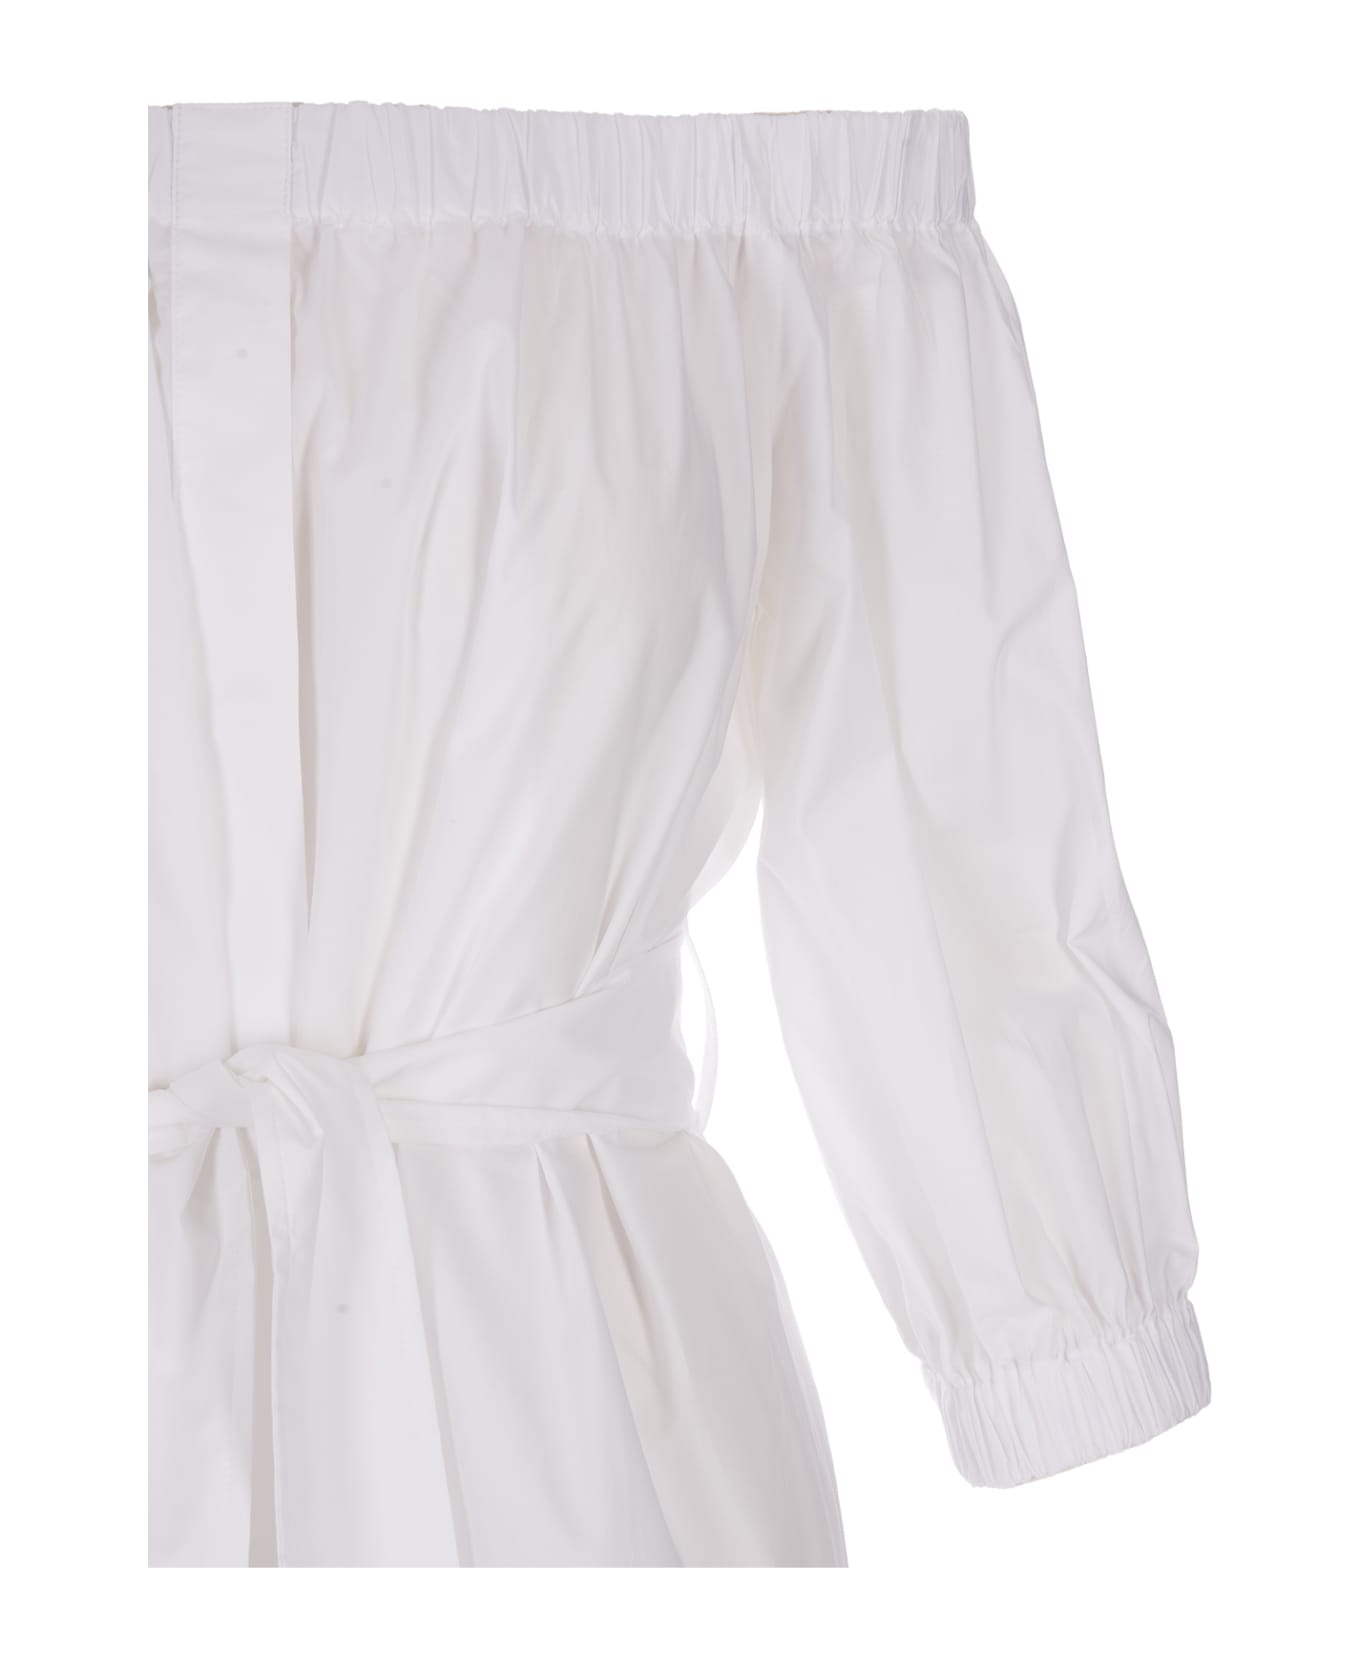 Parosh White Mini Dress With Puff Sleeves - Bianco